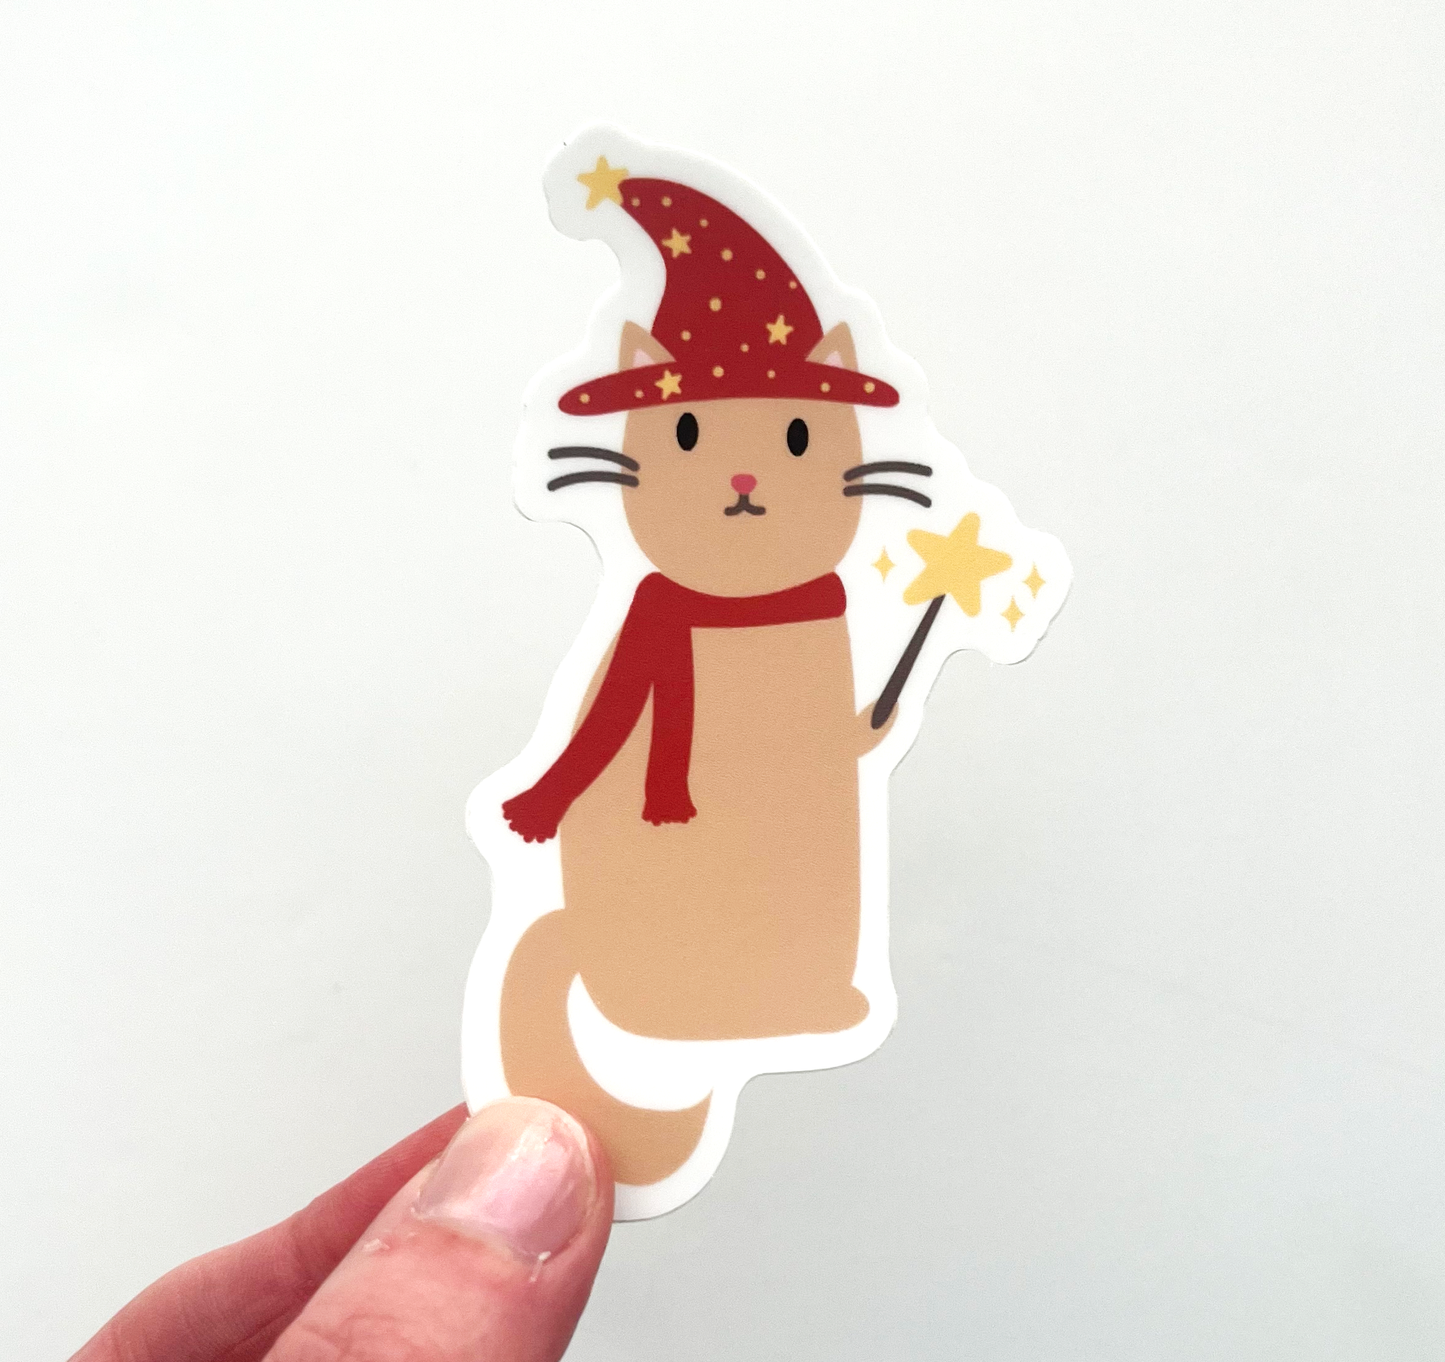 Wizard Cat Sticker